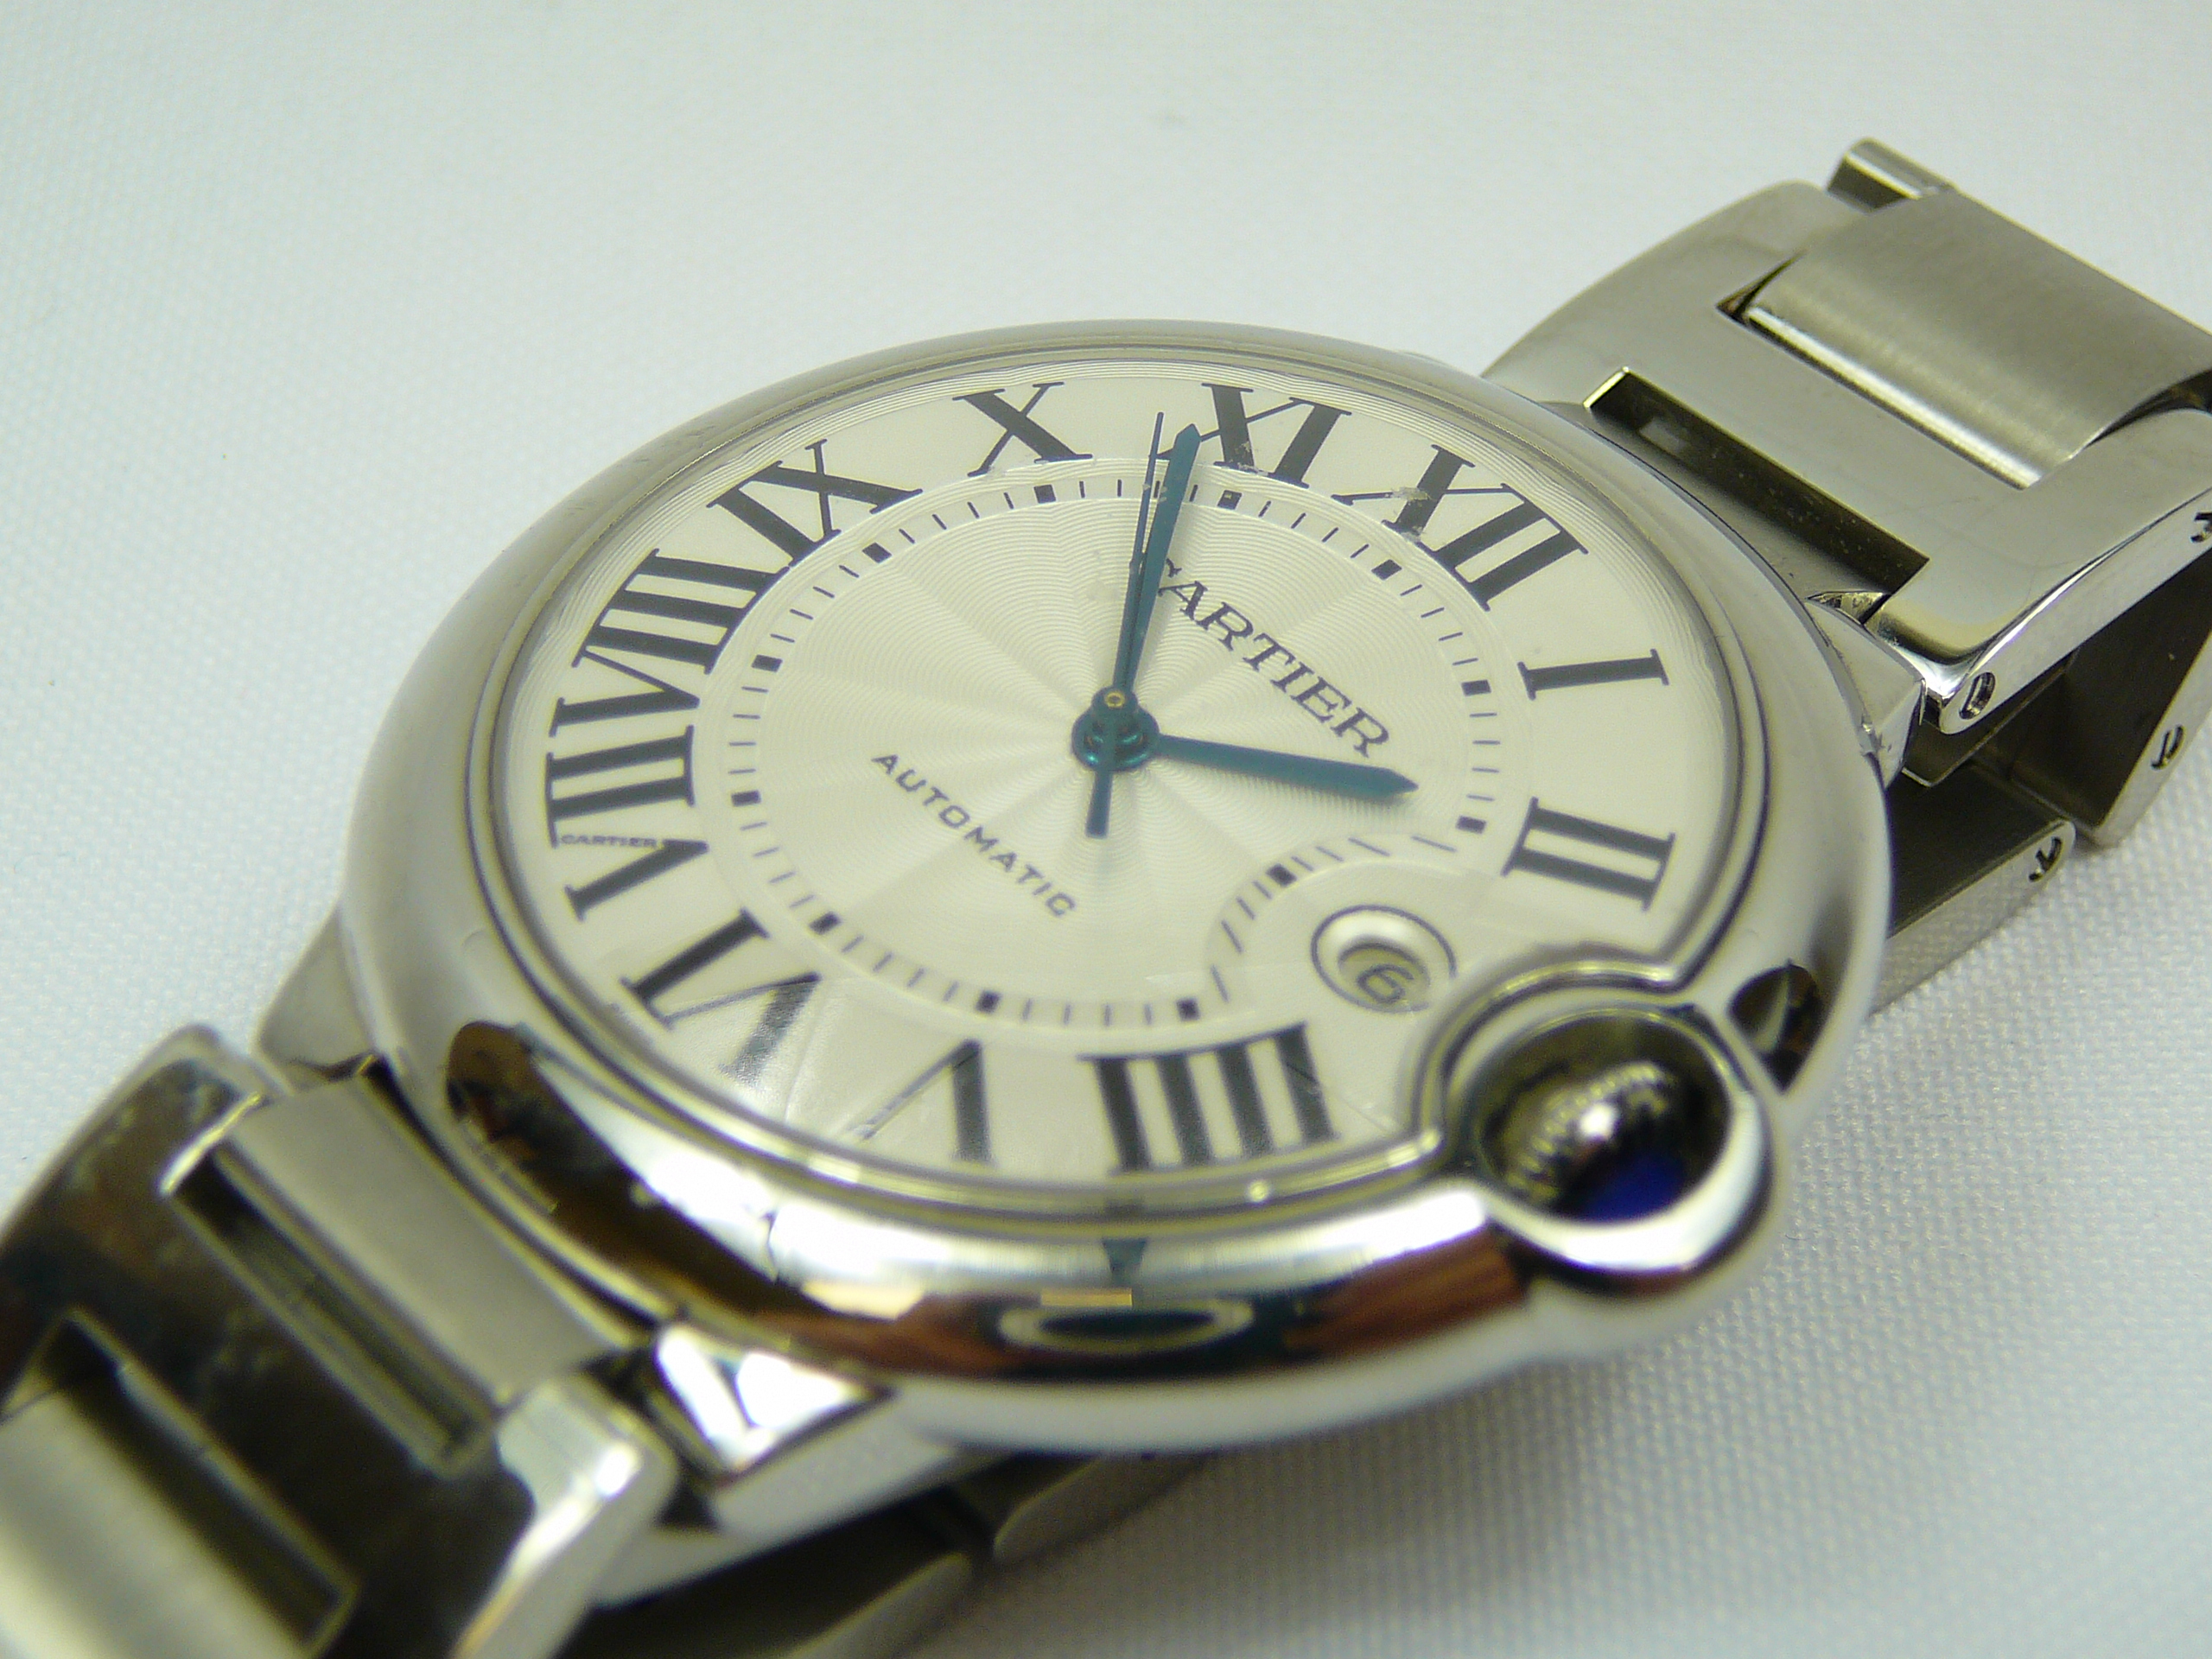 Gents Cartier Wrist Watch - Image 2 of 7